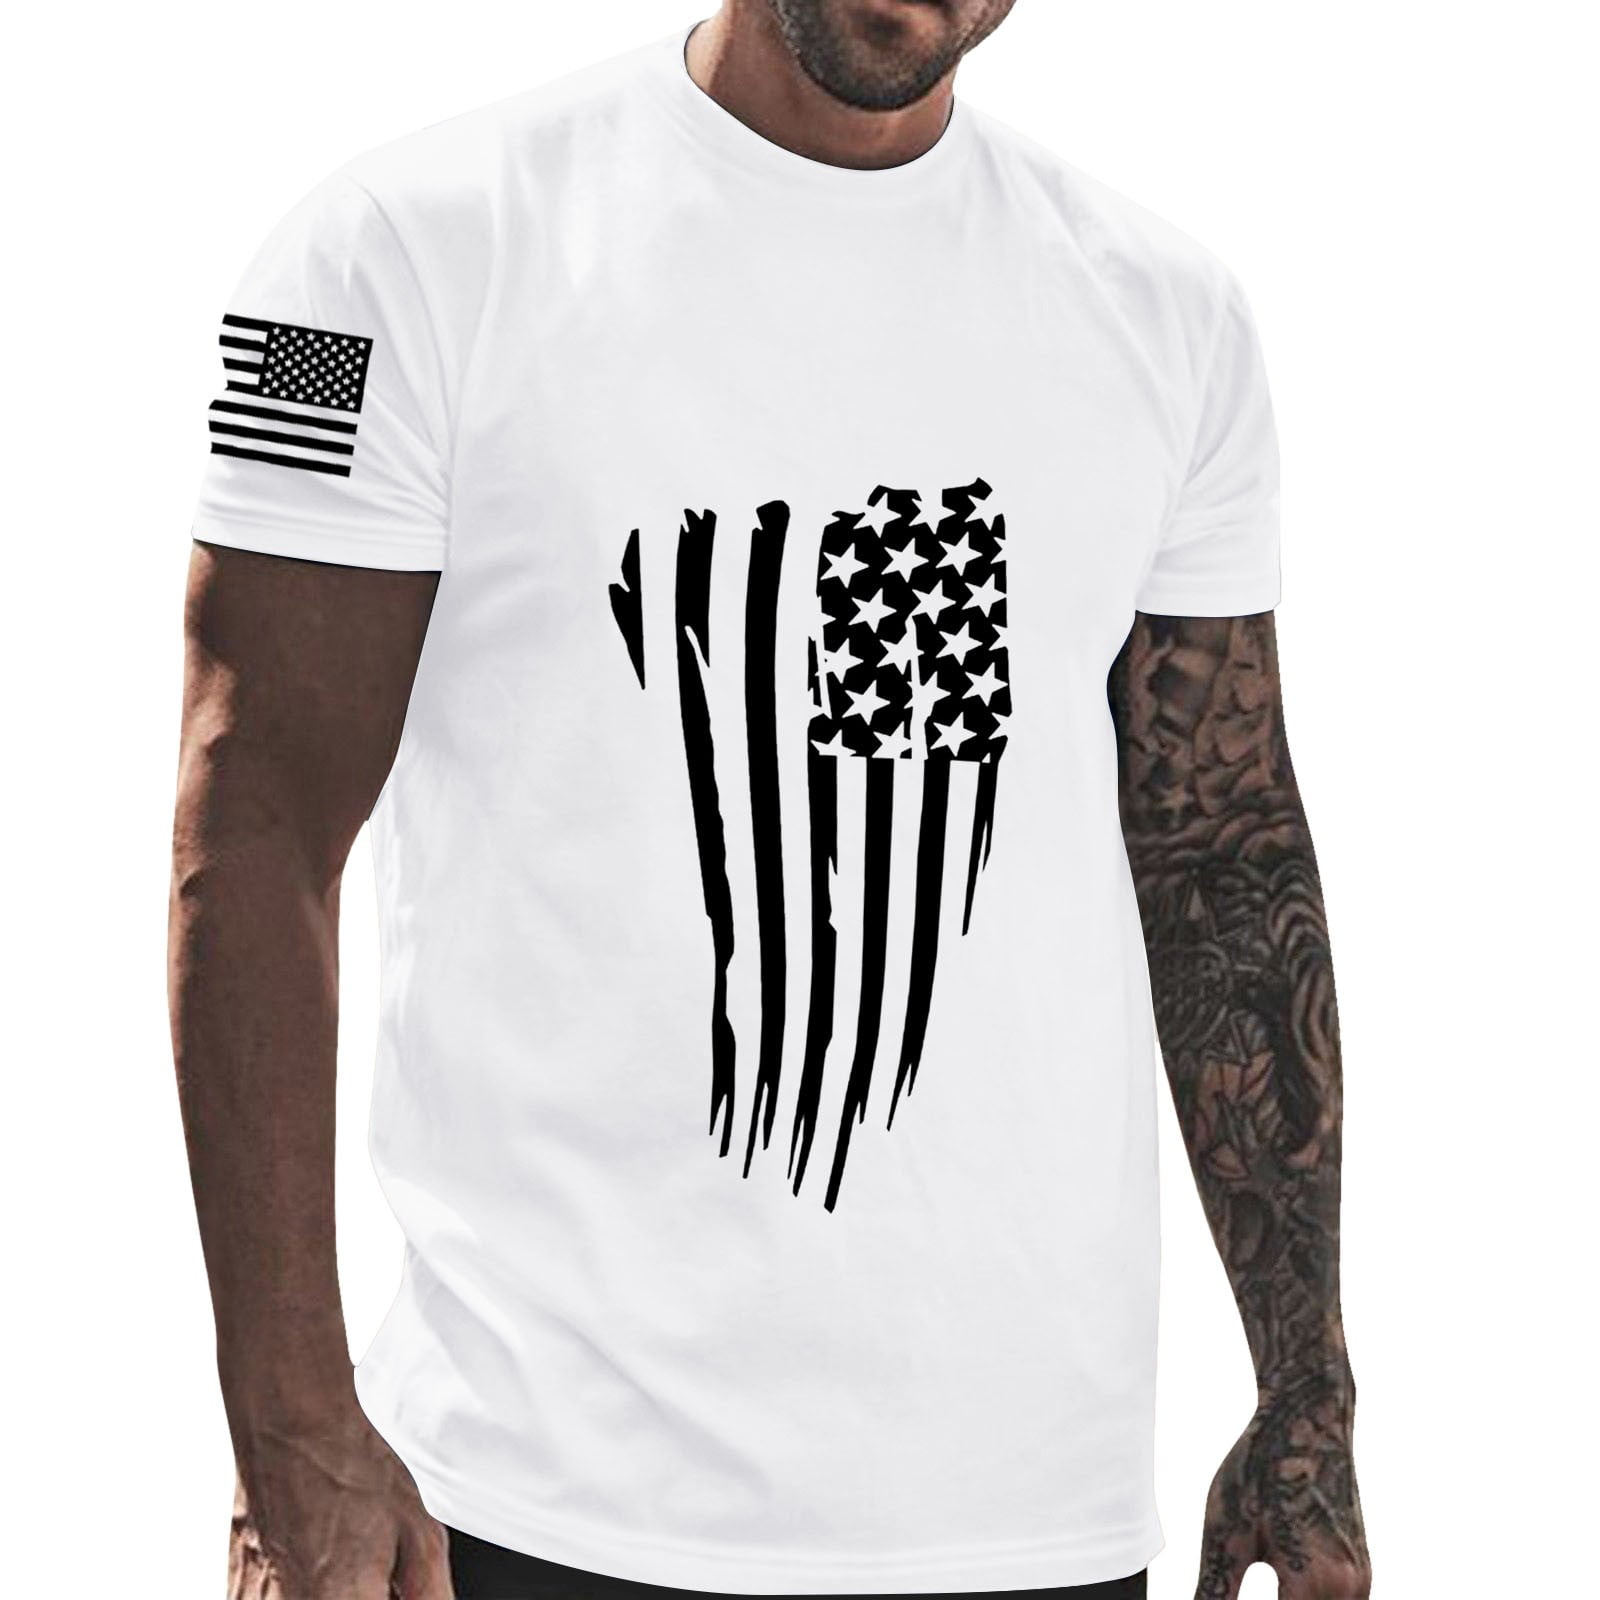 NSQFKALL Patriotic T-Shirts for Men American Flag Shirts Vintage Short ...